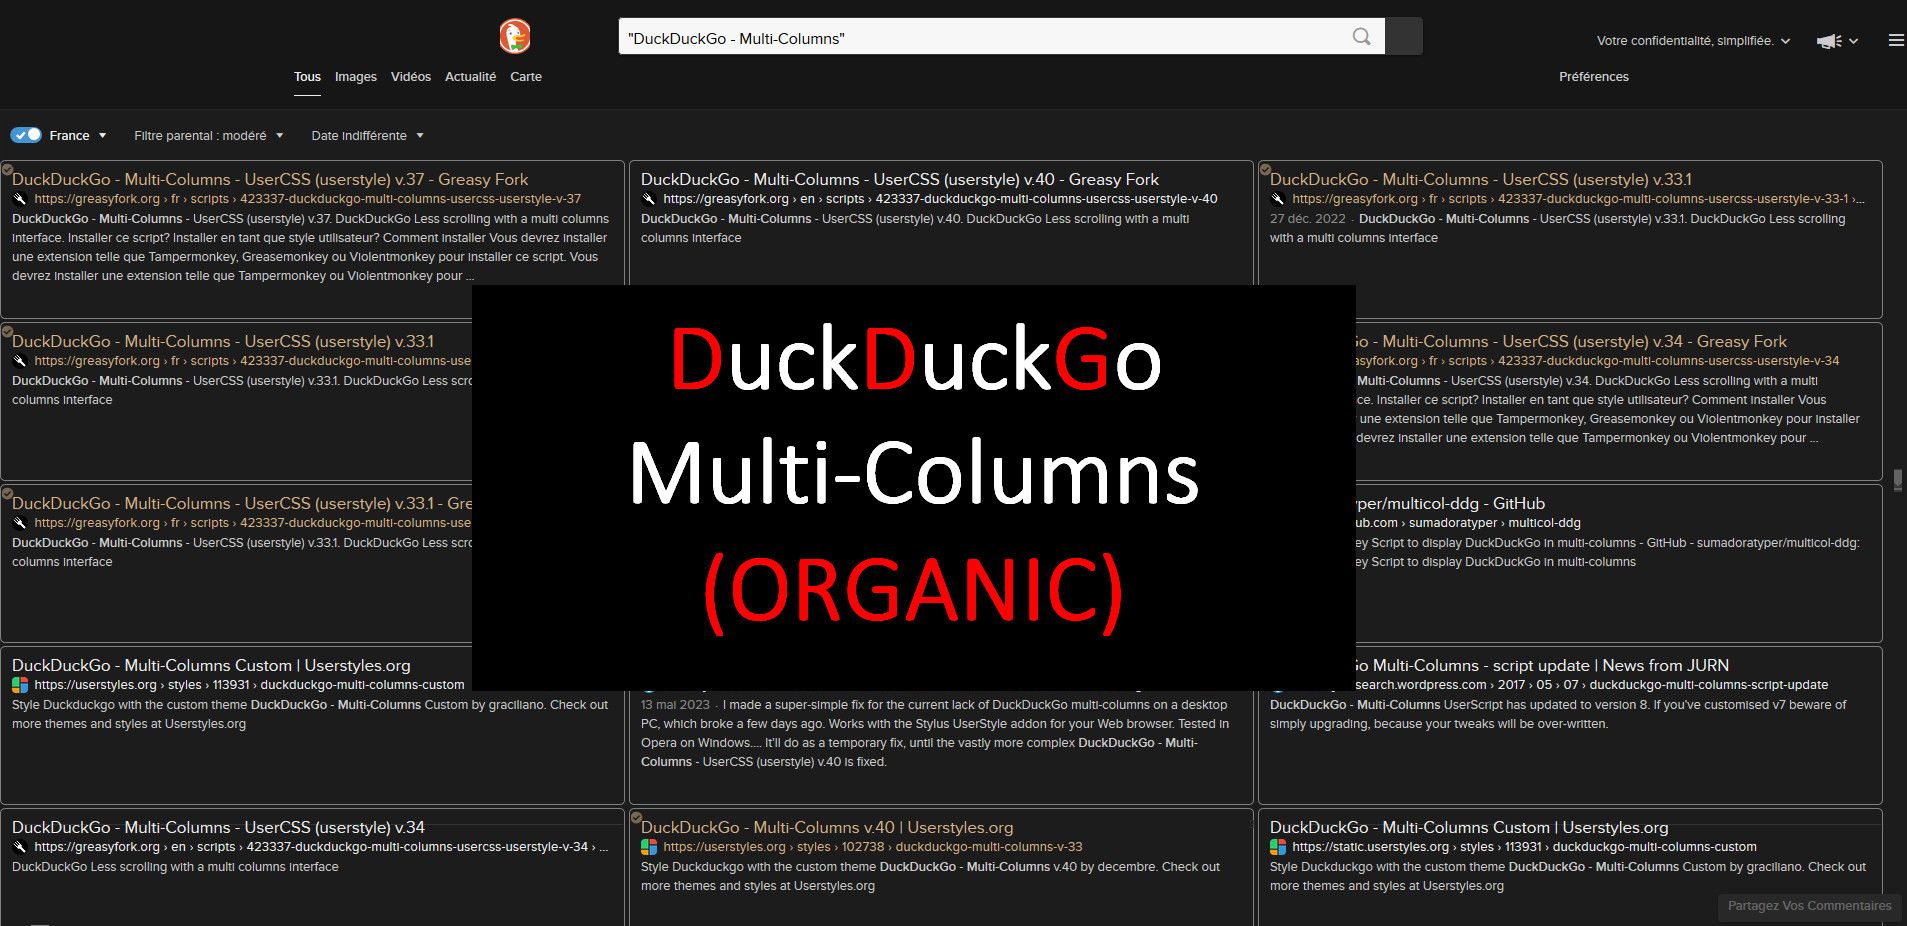 DuckDuckGo - Multi-Columns (ORGANIC) v.45 screenshot